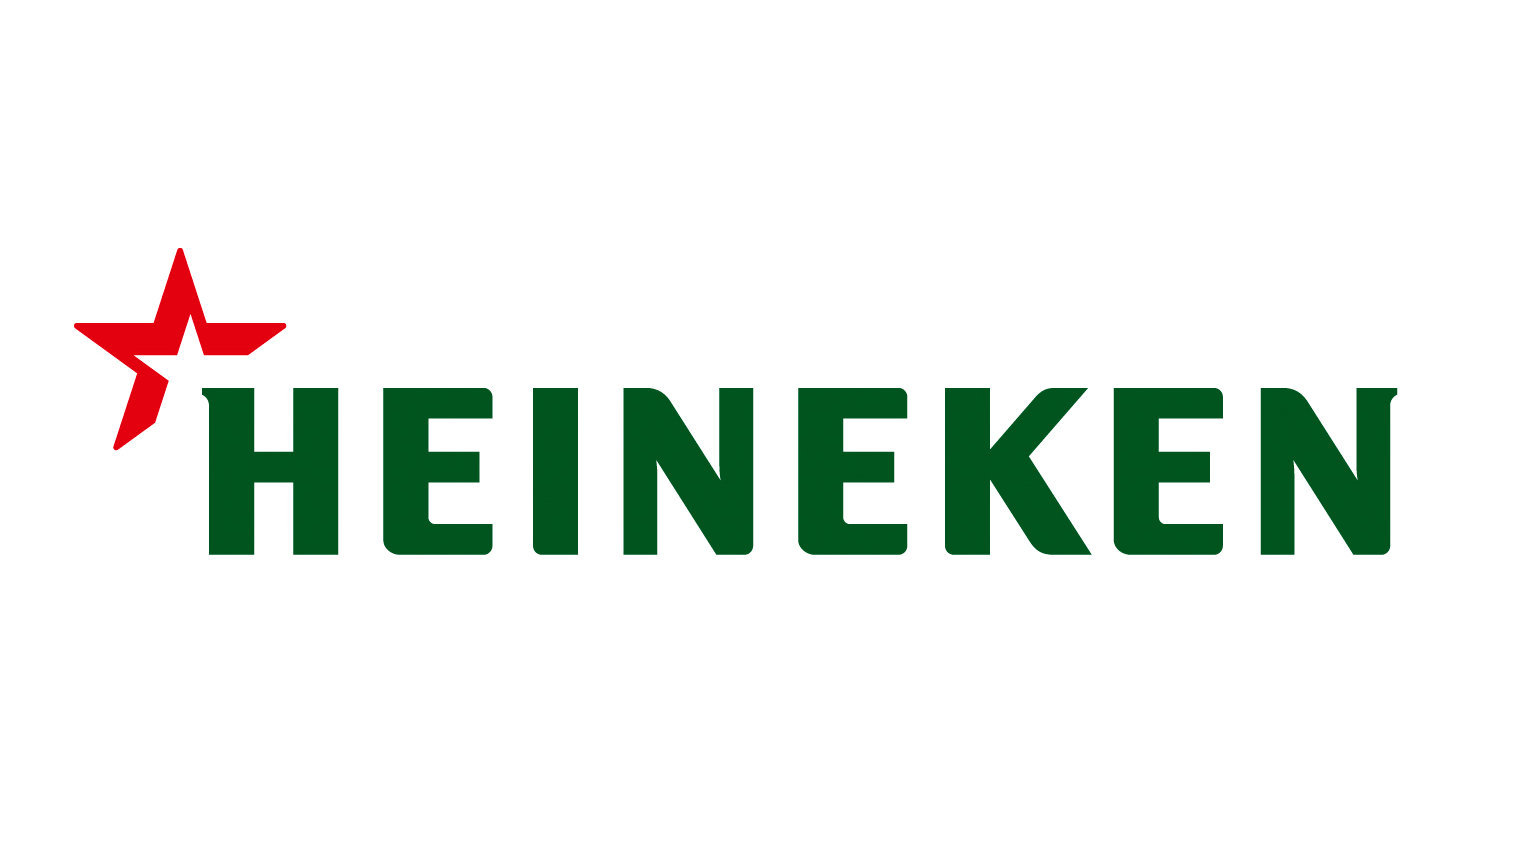 SWOT analysis of Heineken